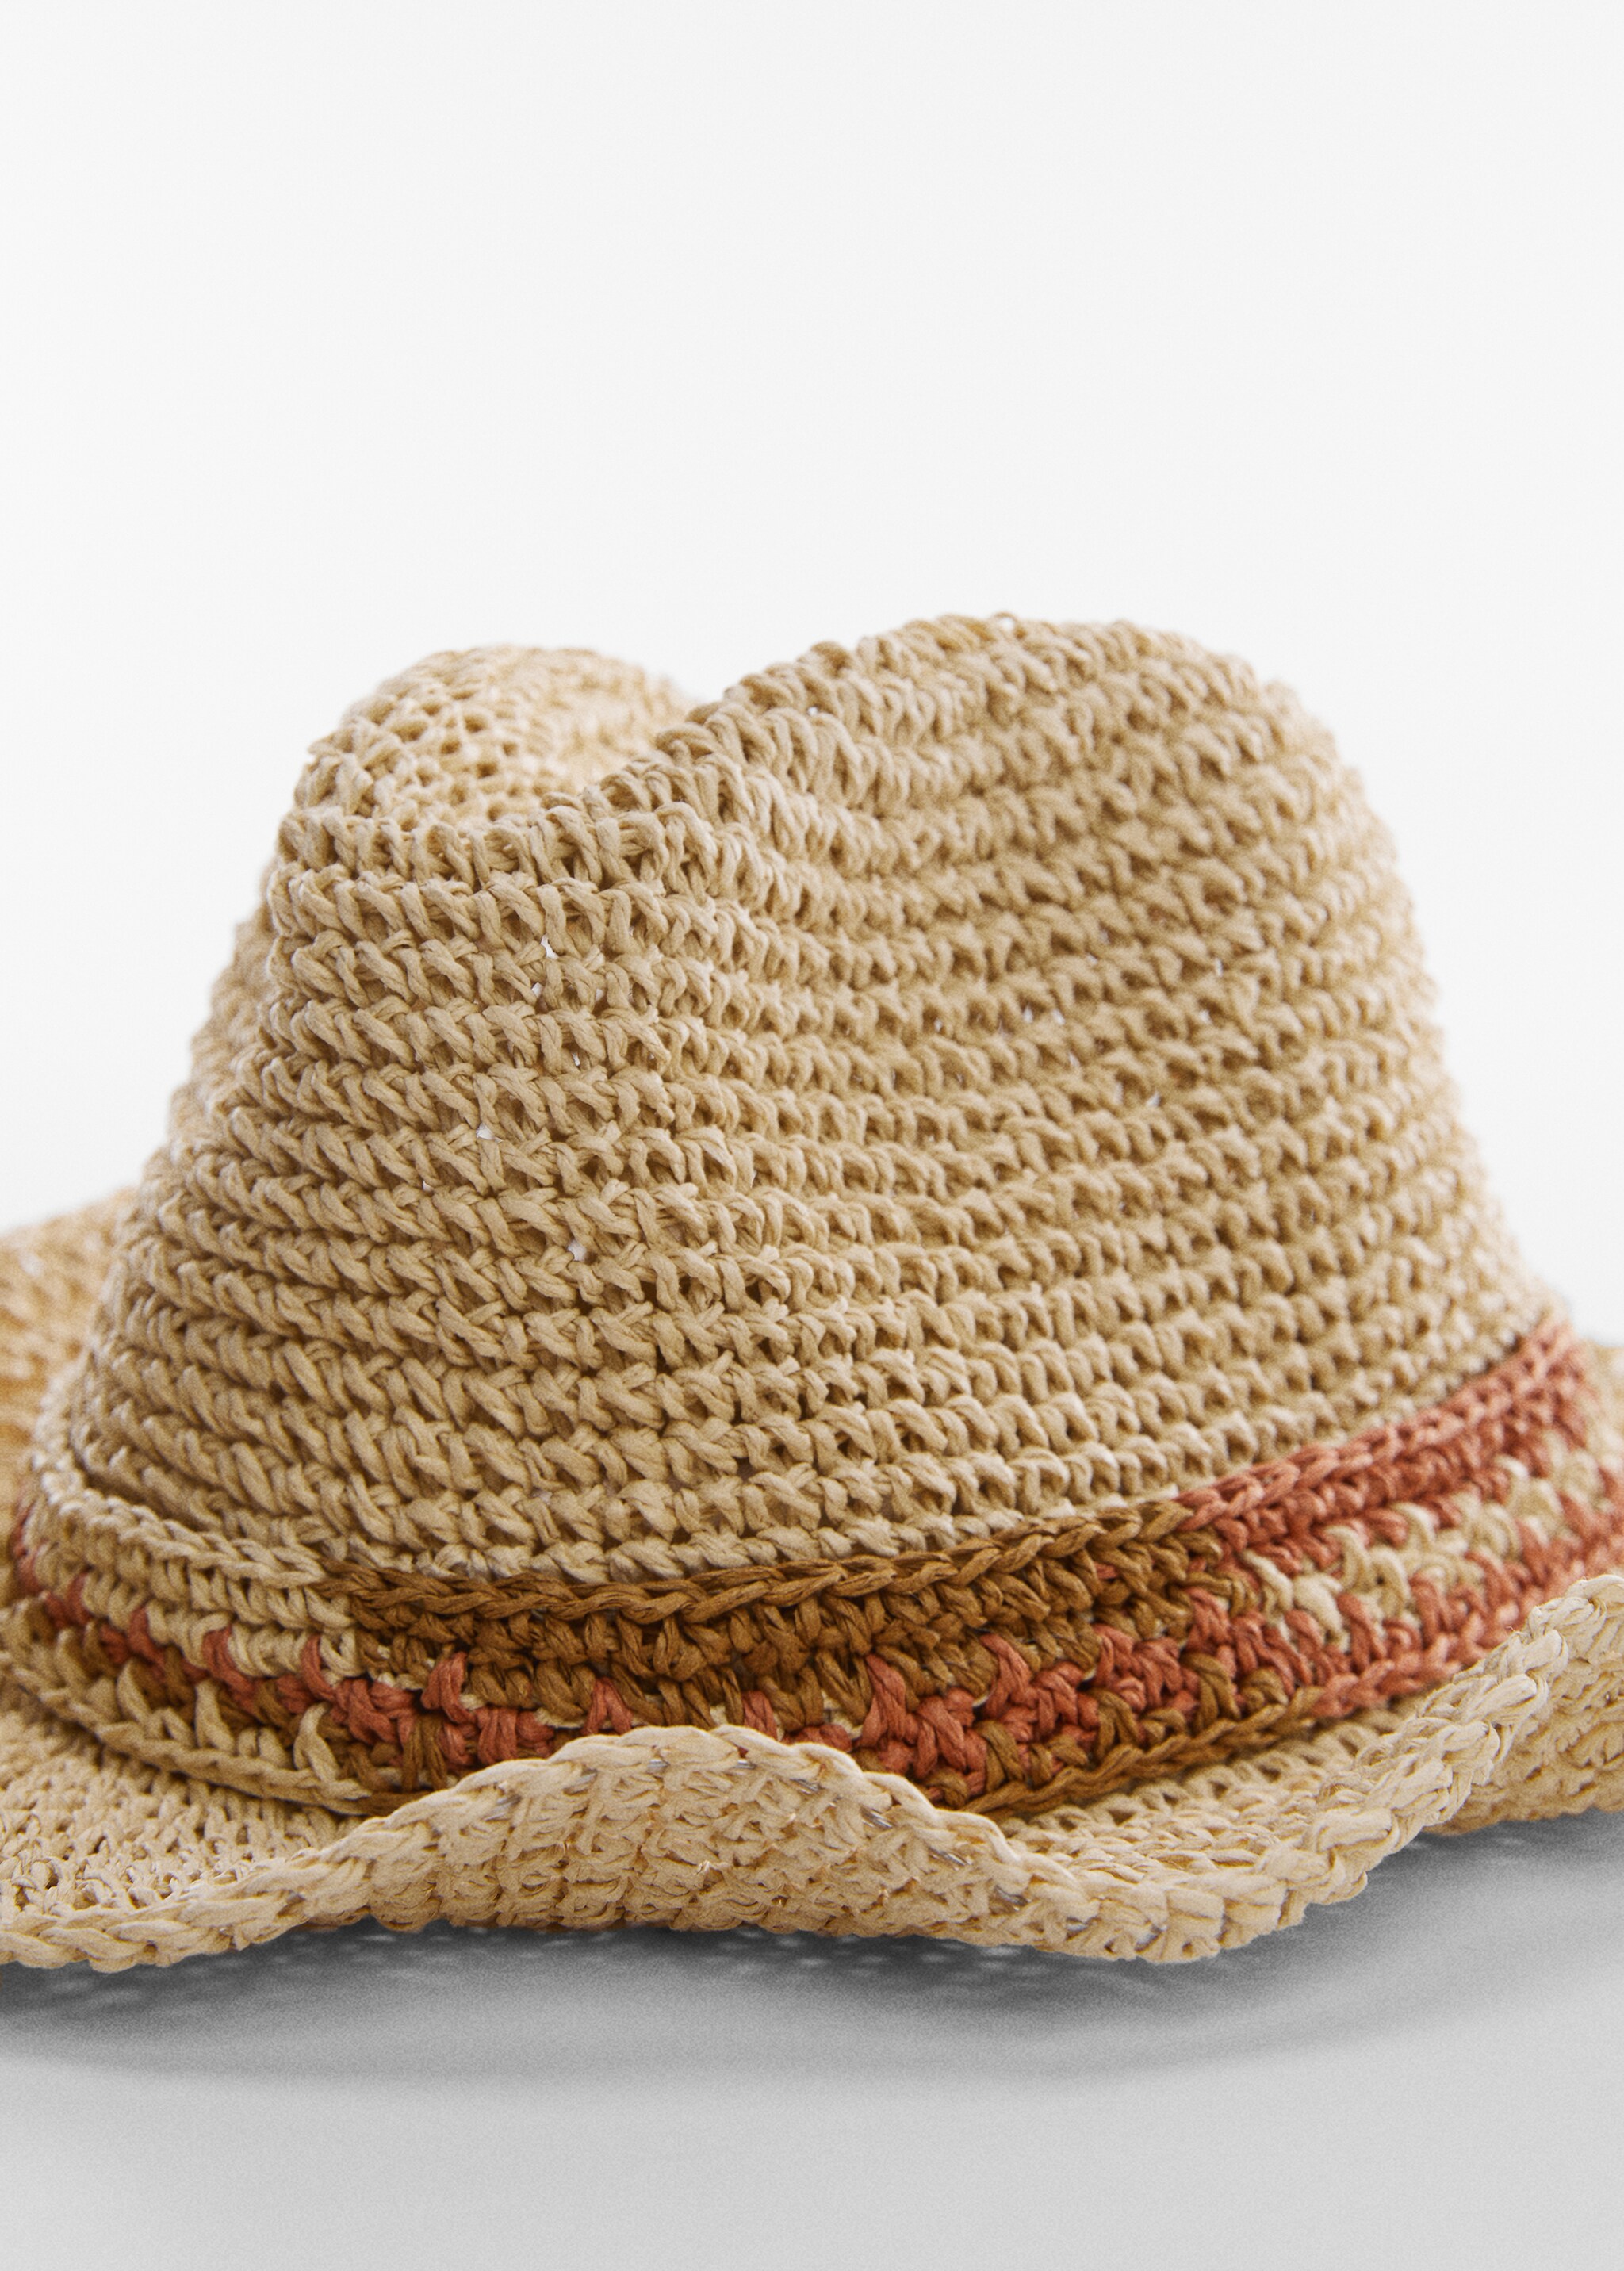 Natural fibre hat - Details of the article 2